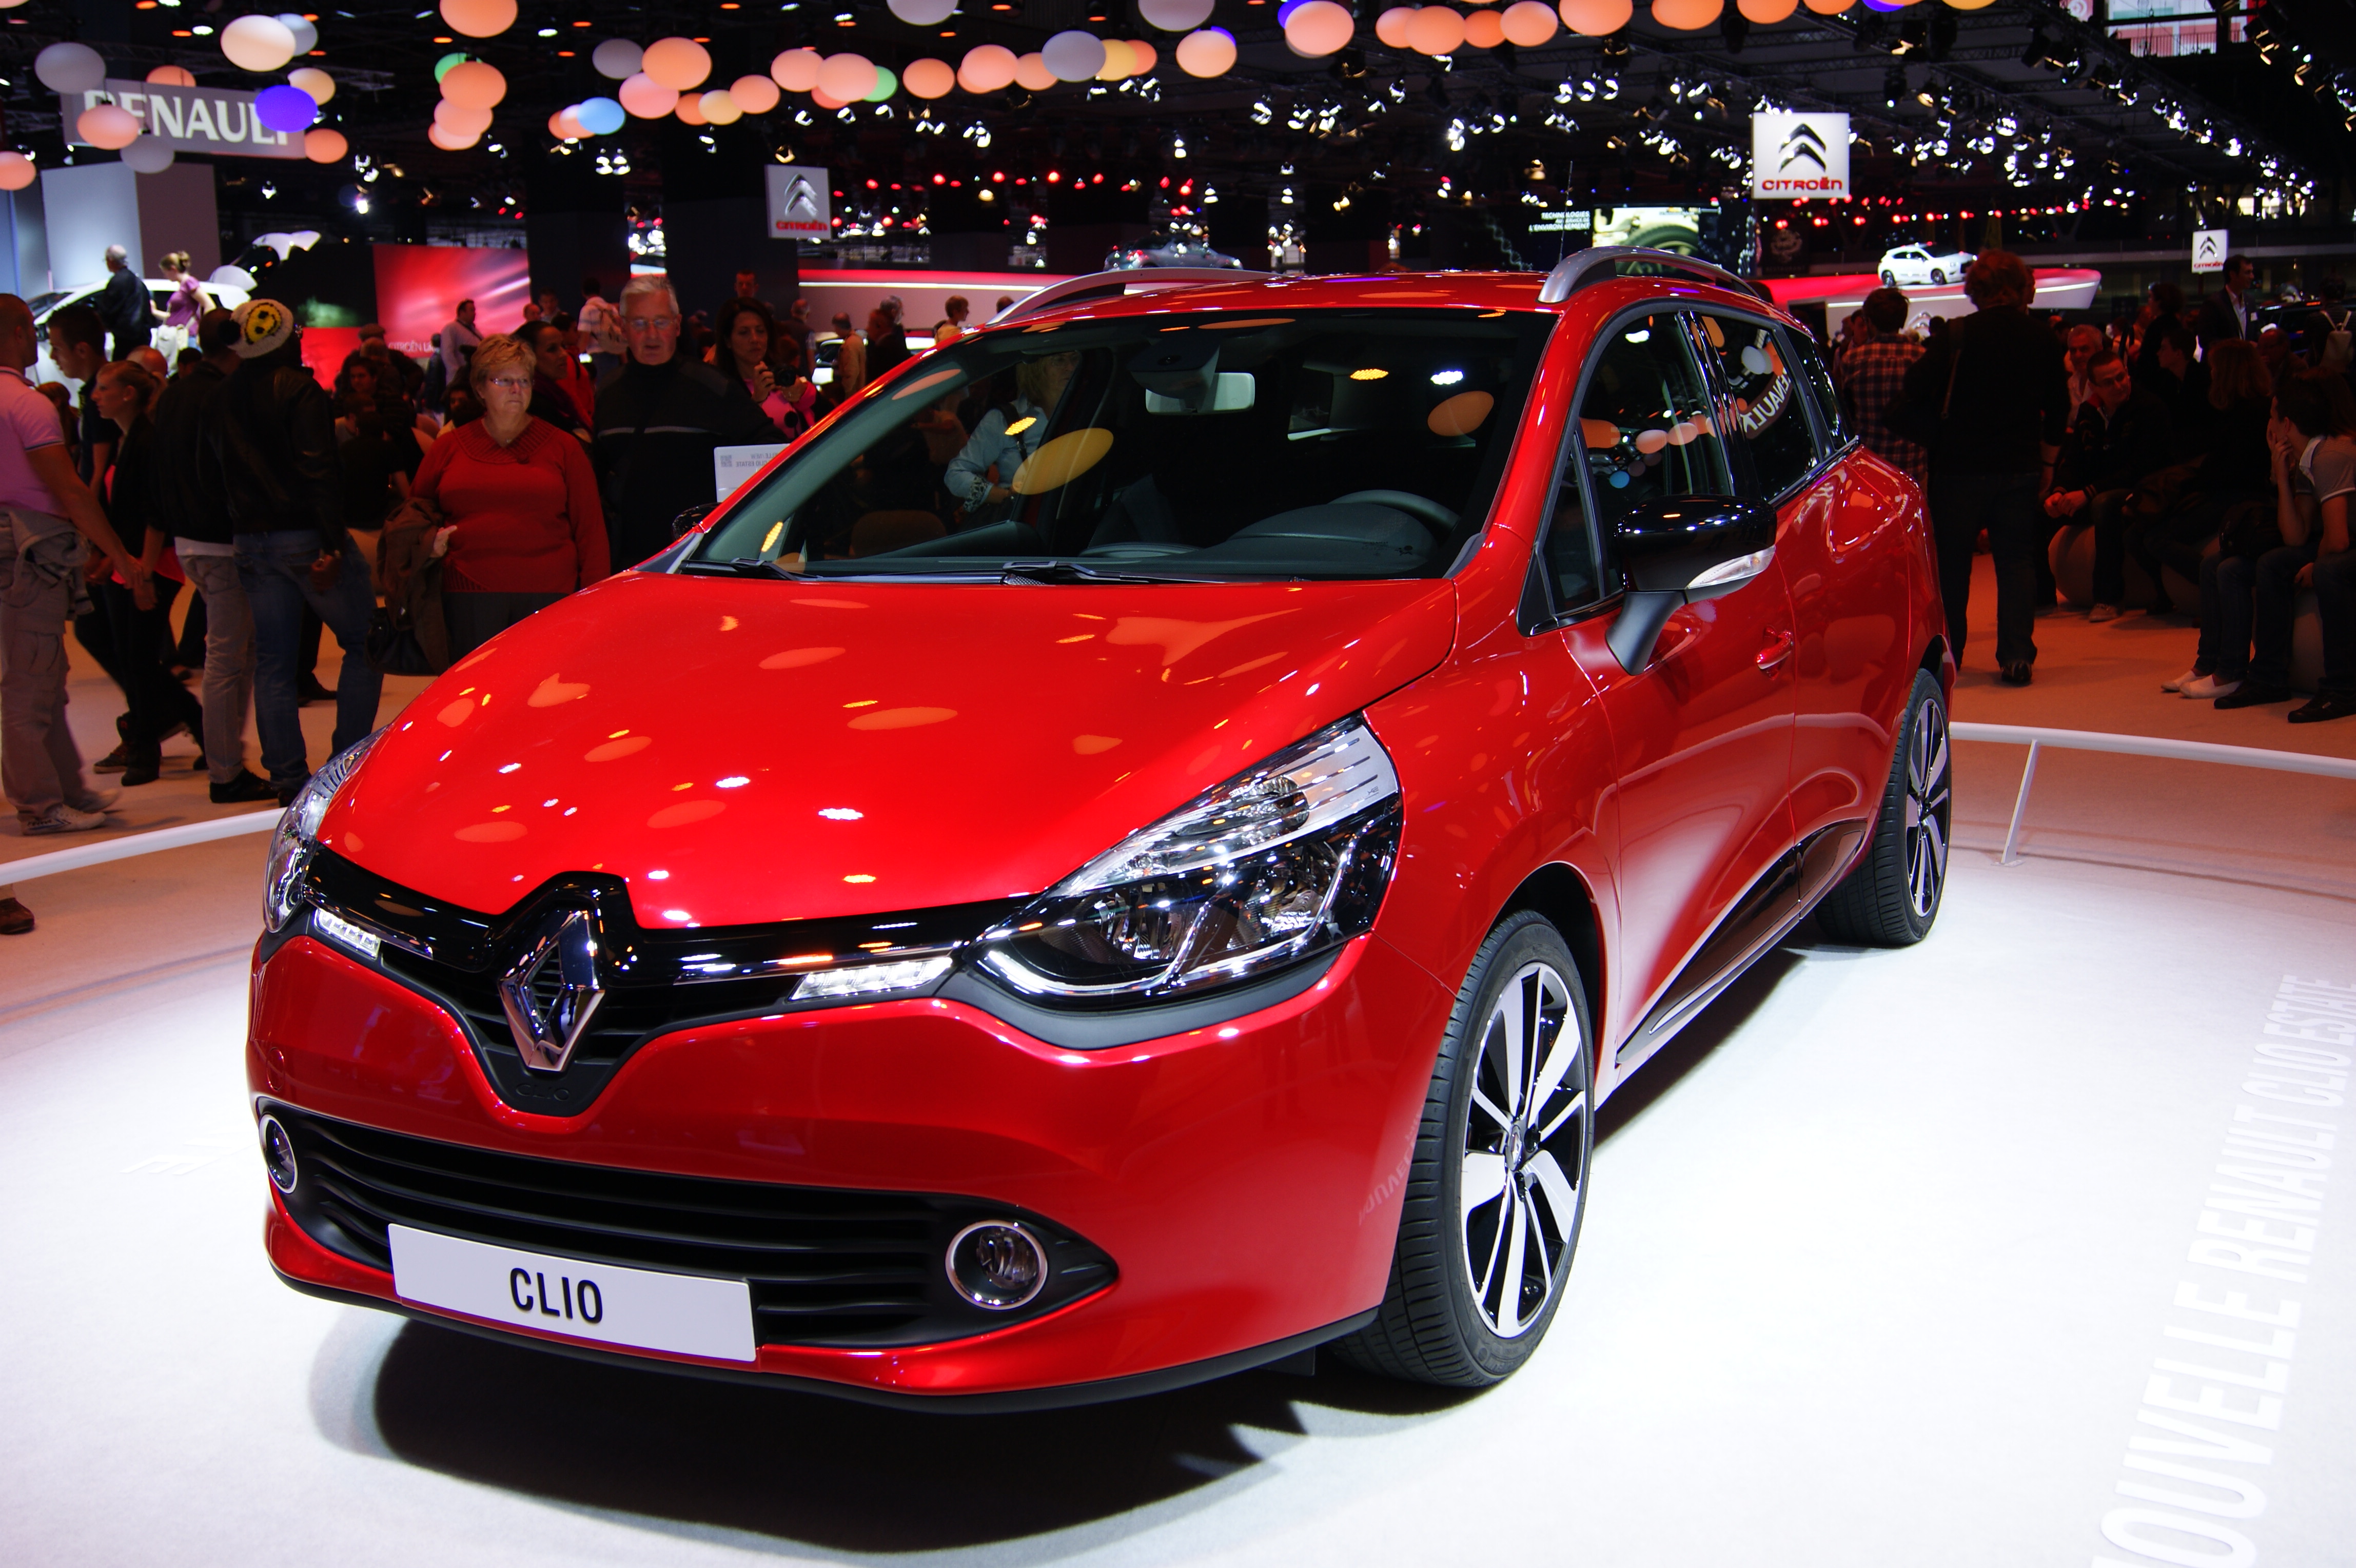 Renault Clio - Wikimedia Commons